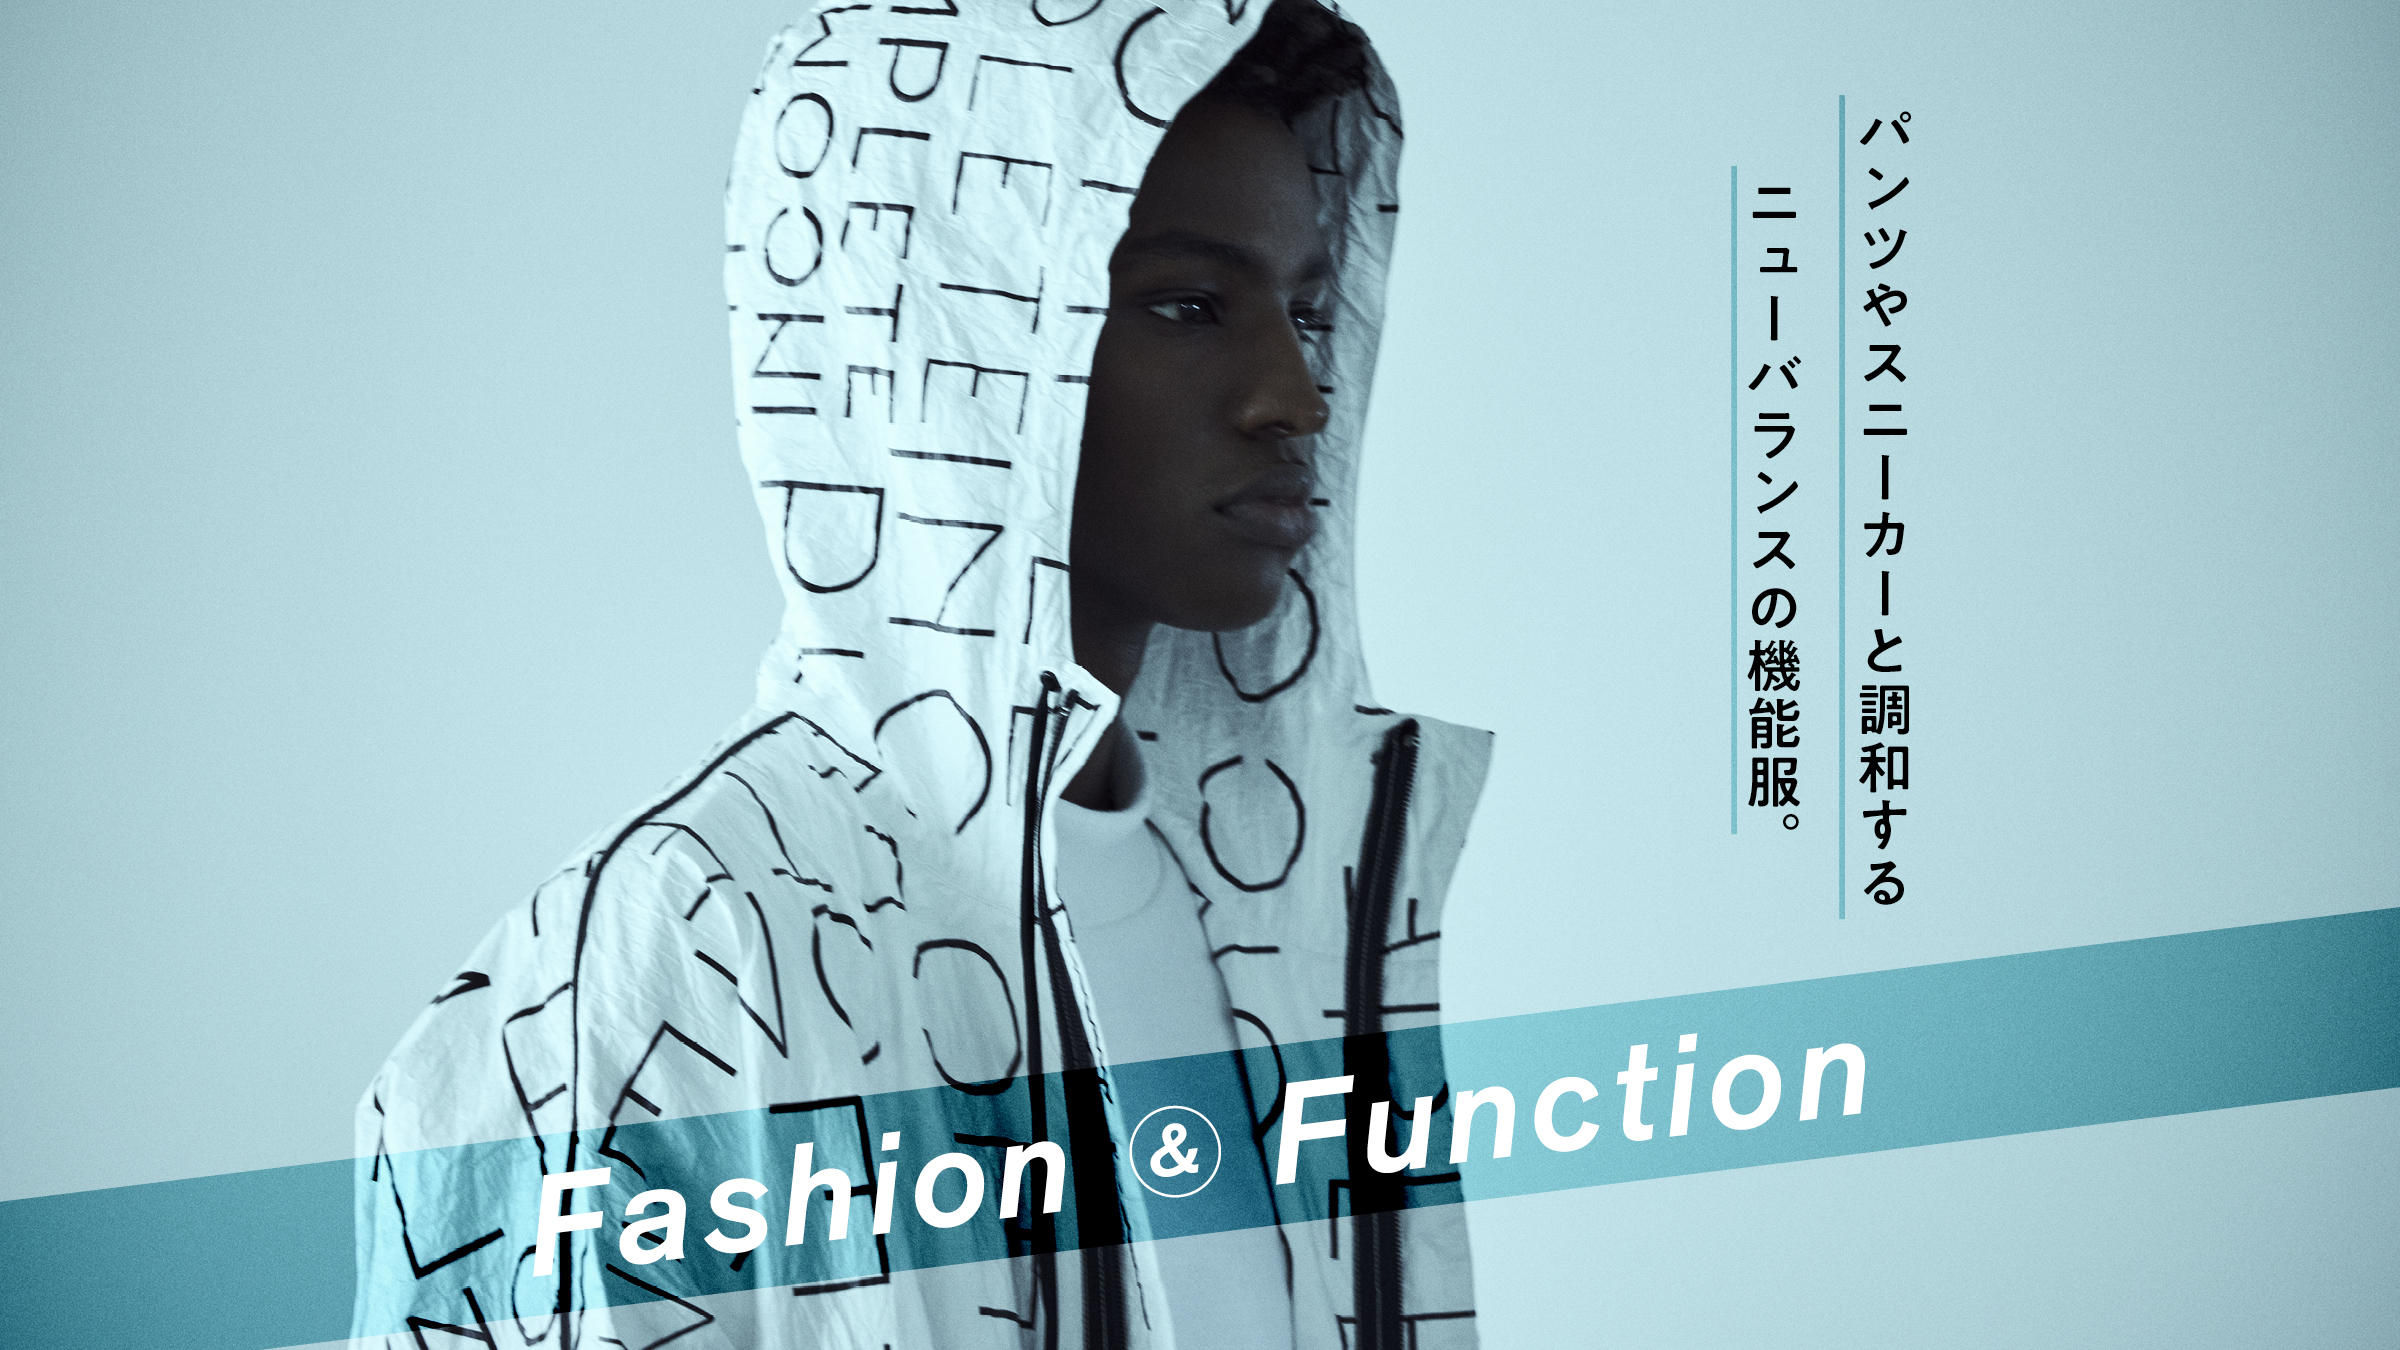 Fashion & Function<br>パンツやスニーカーと調和するニュ−バランスの機能服。